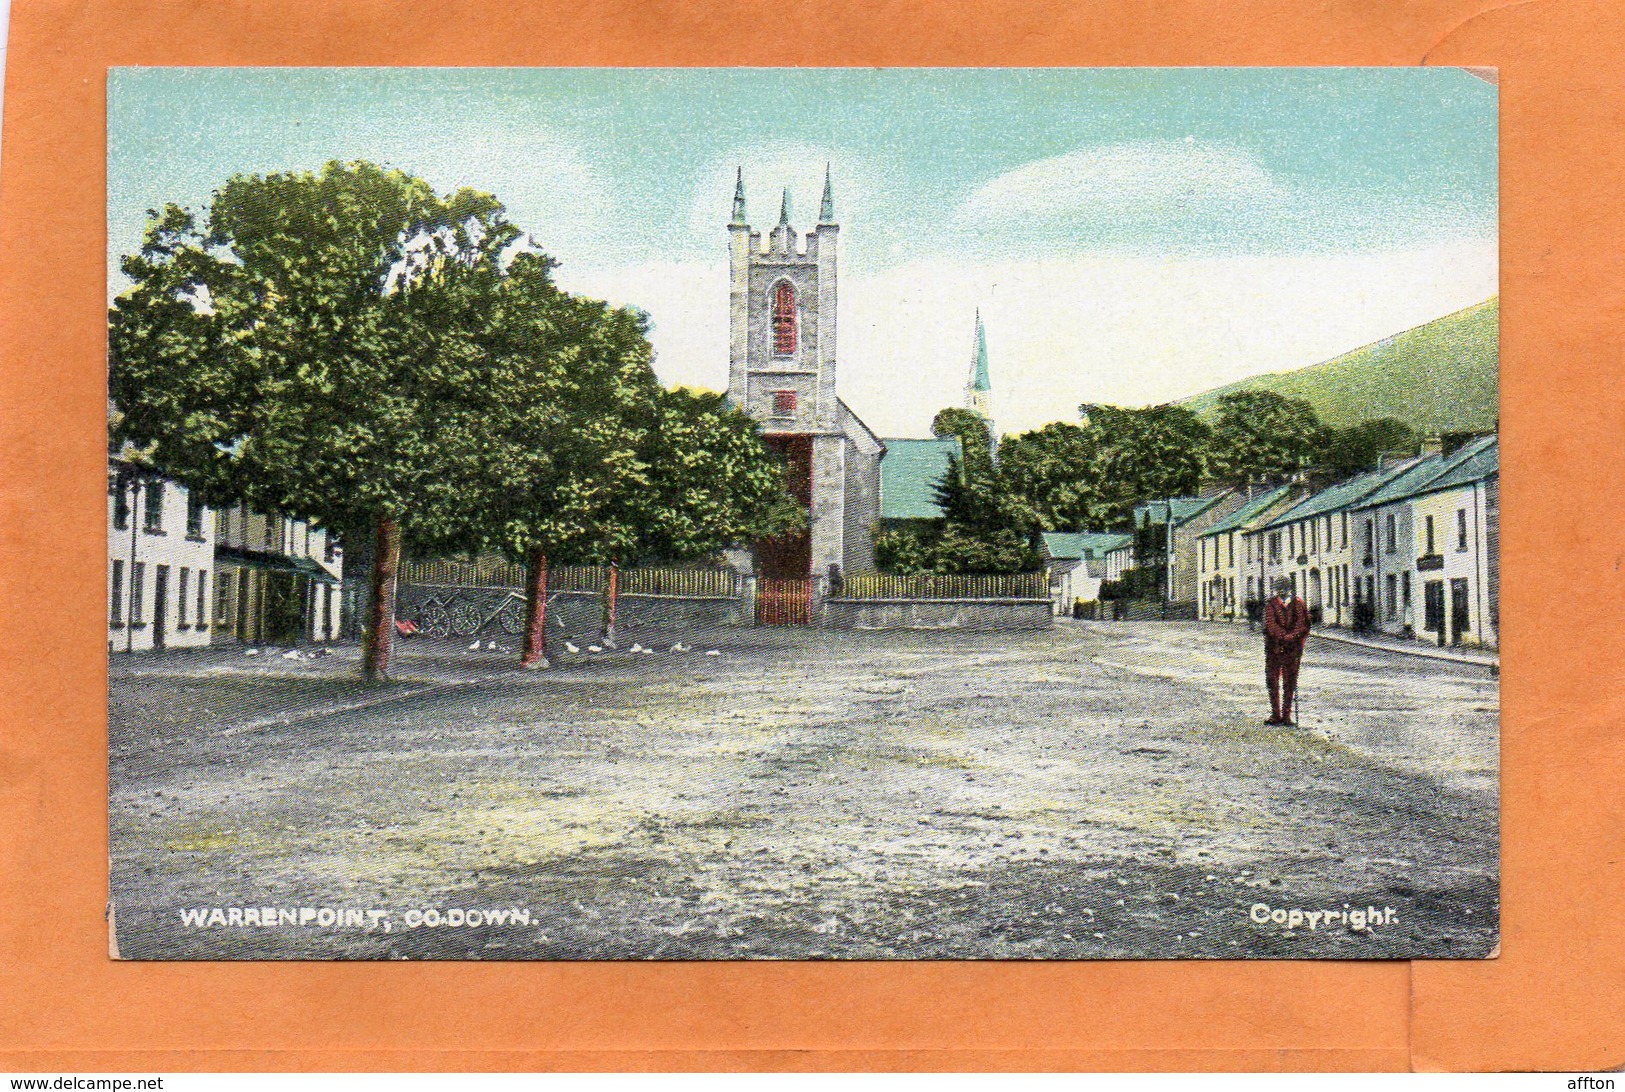 Warrenpoint Co Down Northern Ireland 1905 Postcard - Down